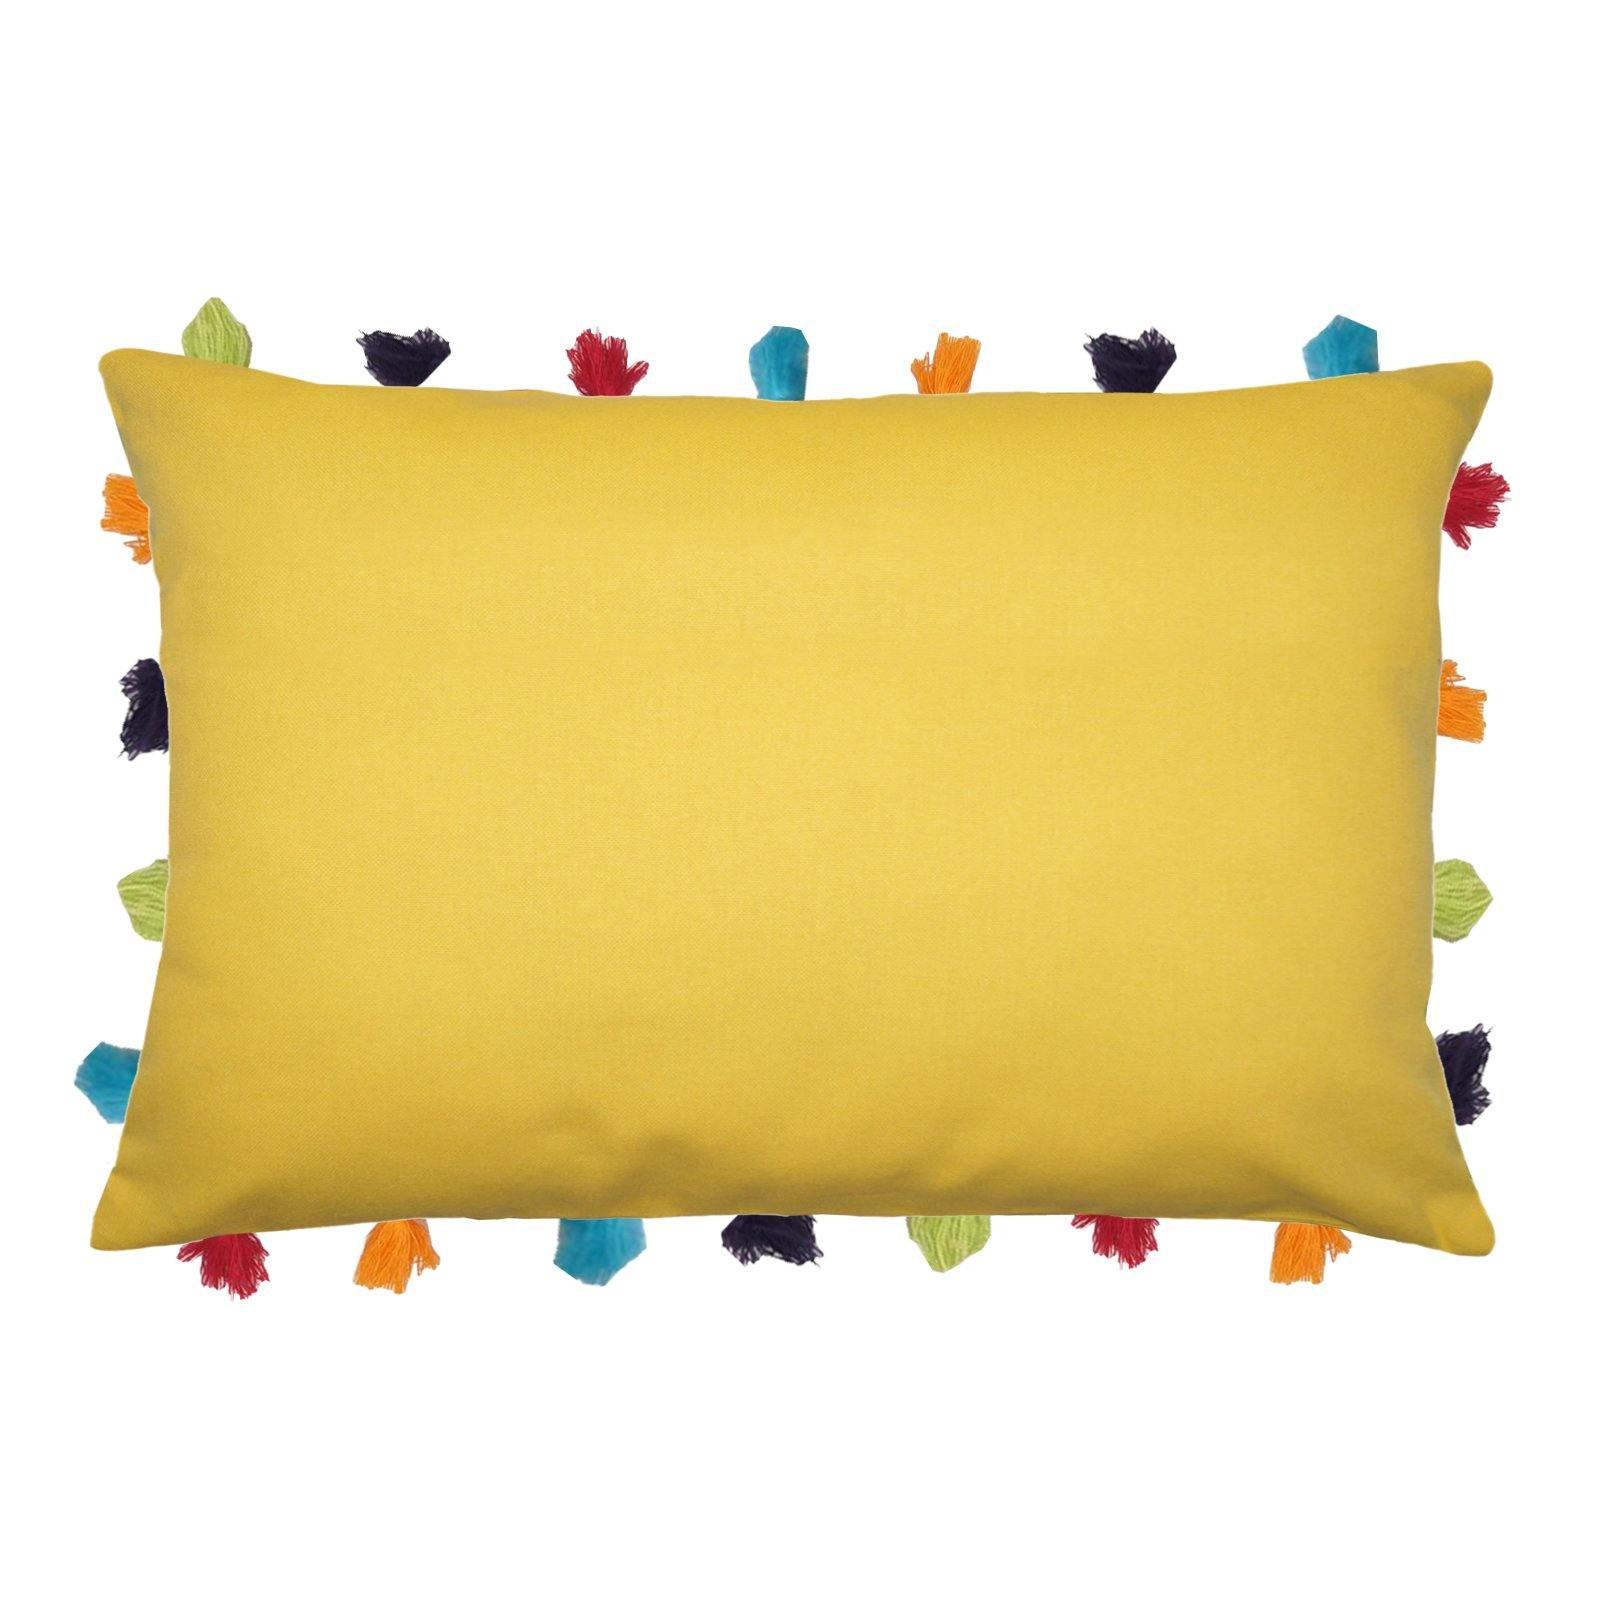 Lushomes Lemon Chrome Cushion Cover with Colorful tassels (Single pc, 14 x 20”) - Lushomes